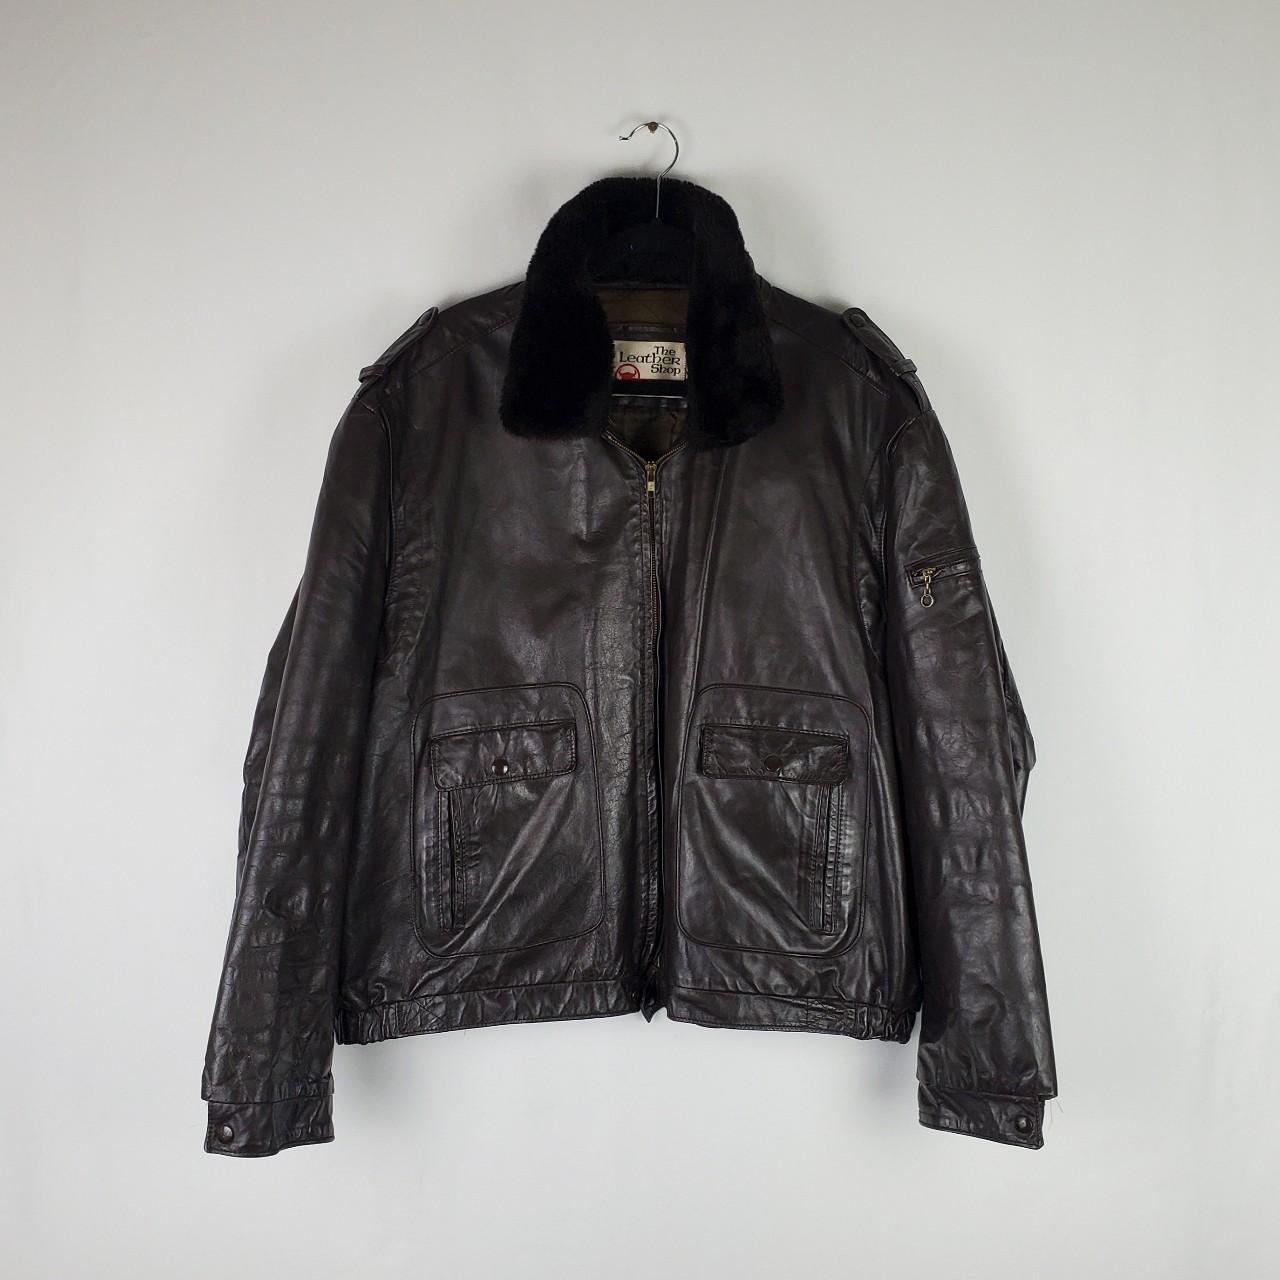 Vintage The Leather Shop Leather Bomber Jacket. What... - Depop